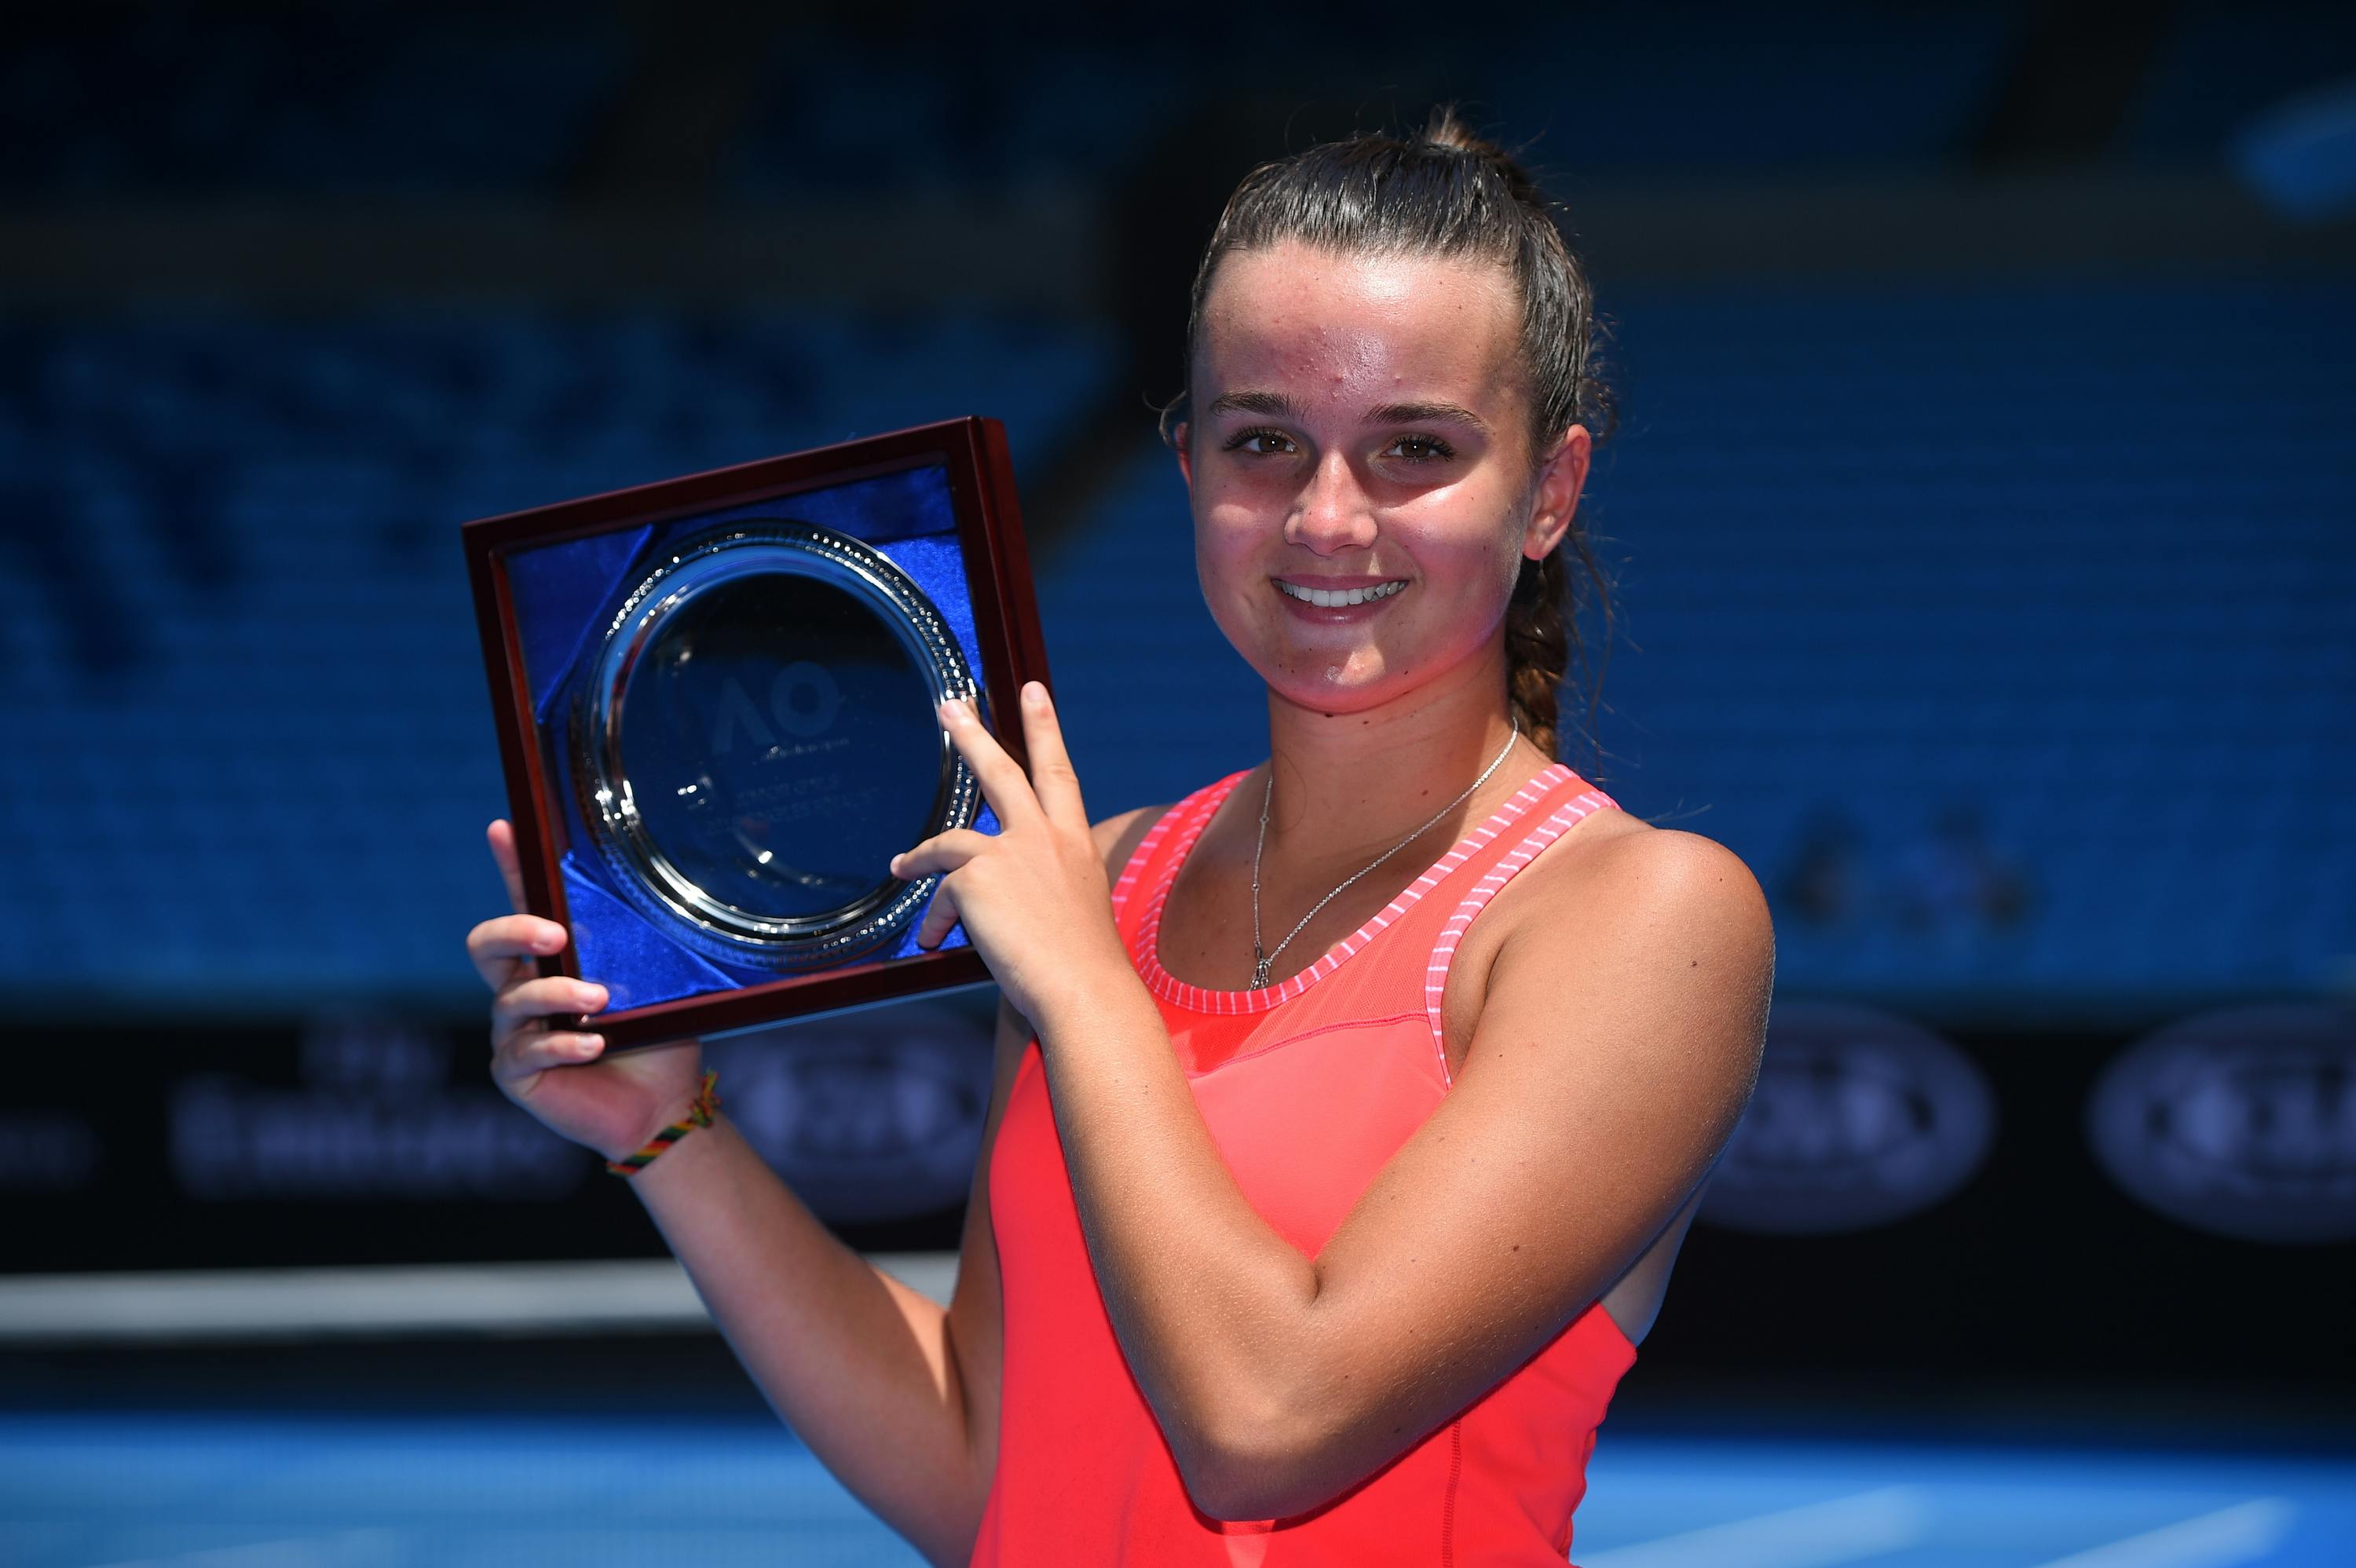 Clara Burel presenting her finalist plate at the 2018 Australian Open